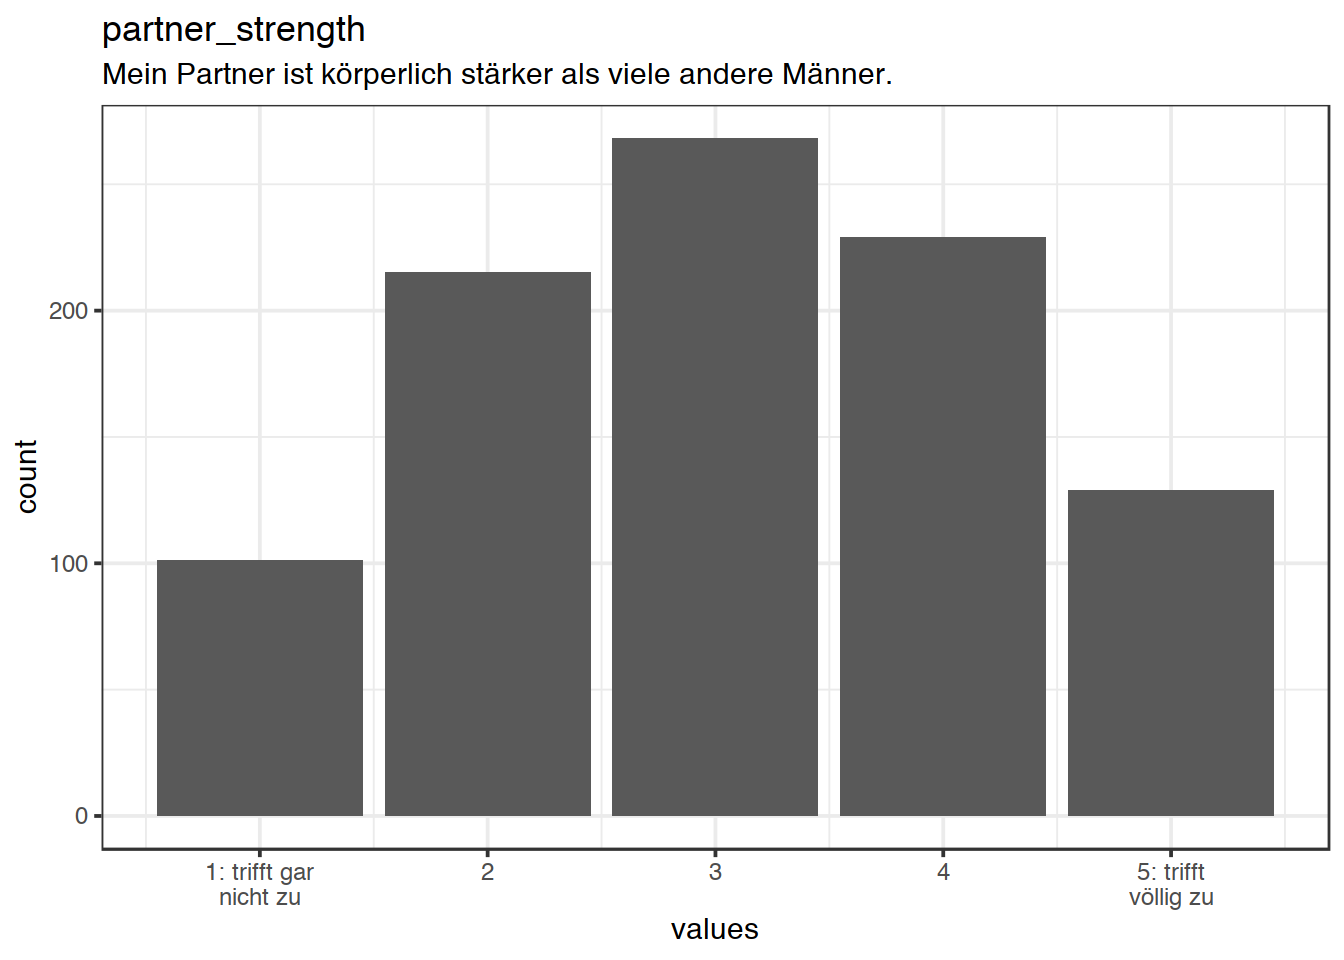 Distribution of values for partner_strength